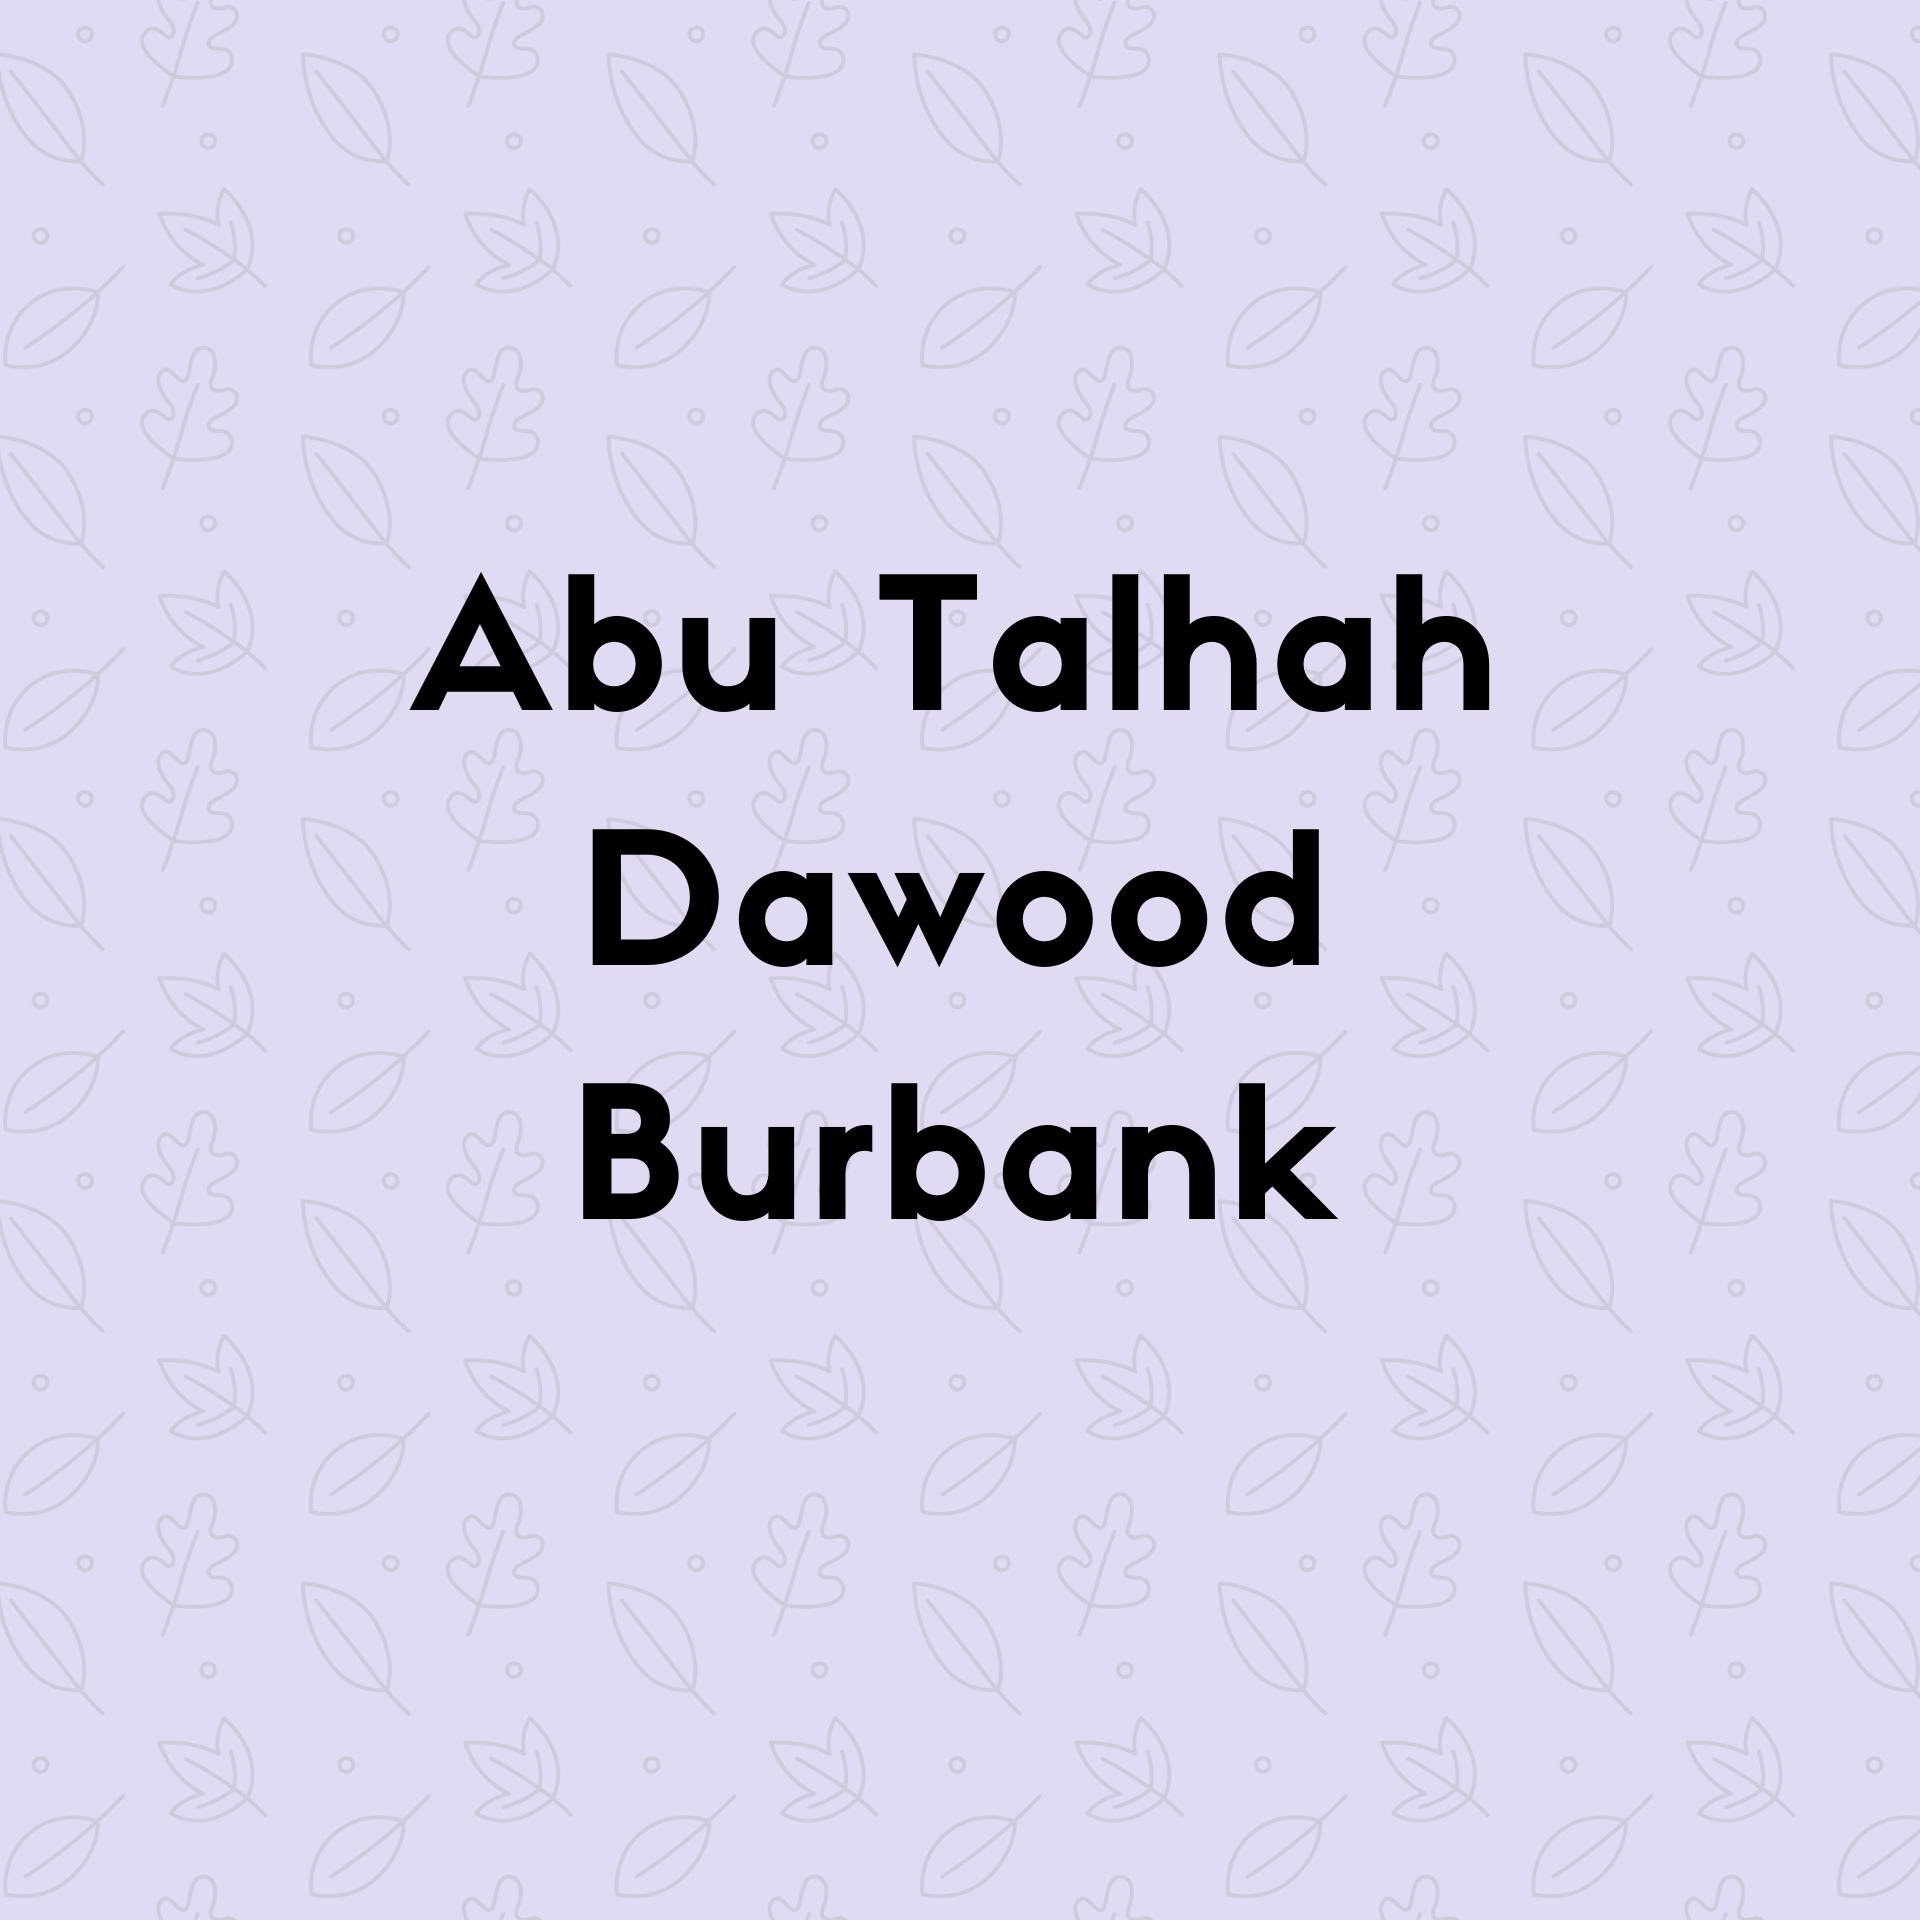  Abu Talhah Dawood Burbank